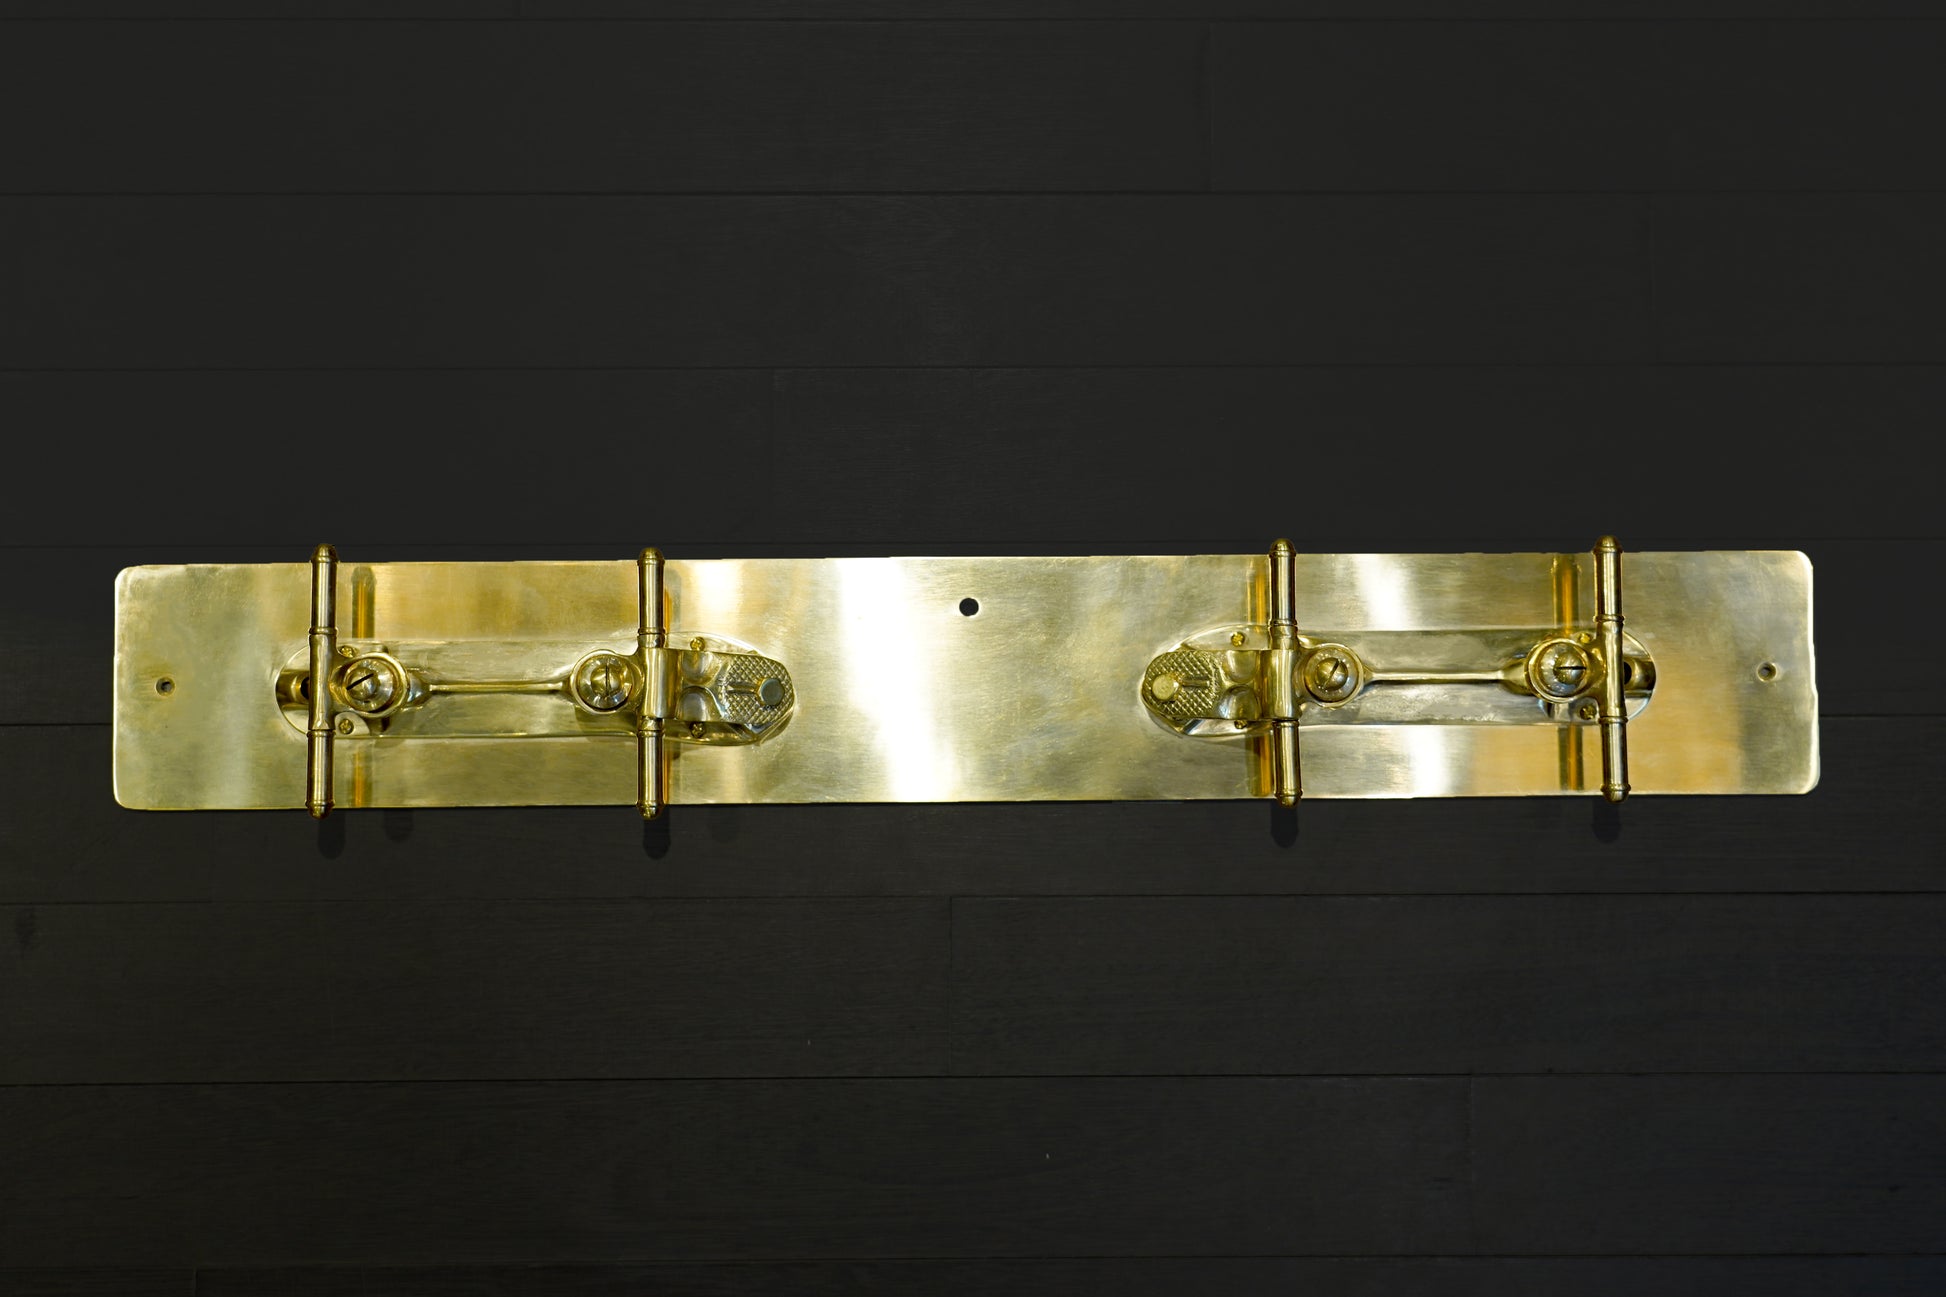 Vintage Ornate Solid Brass Coat Rack 4 Coat Hooks Wall